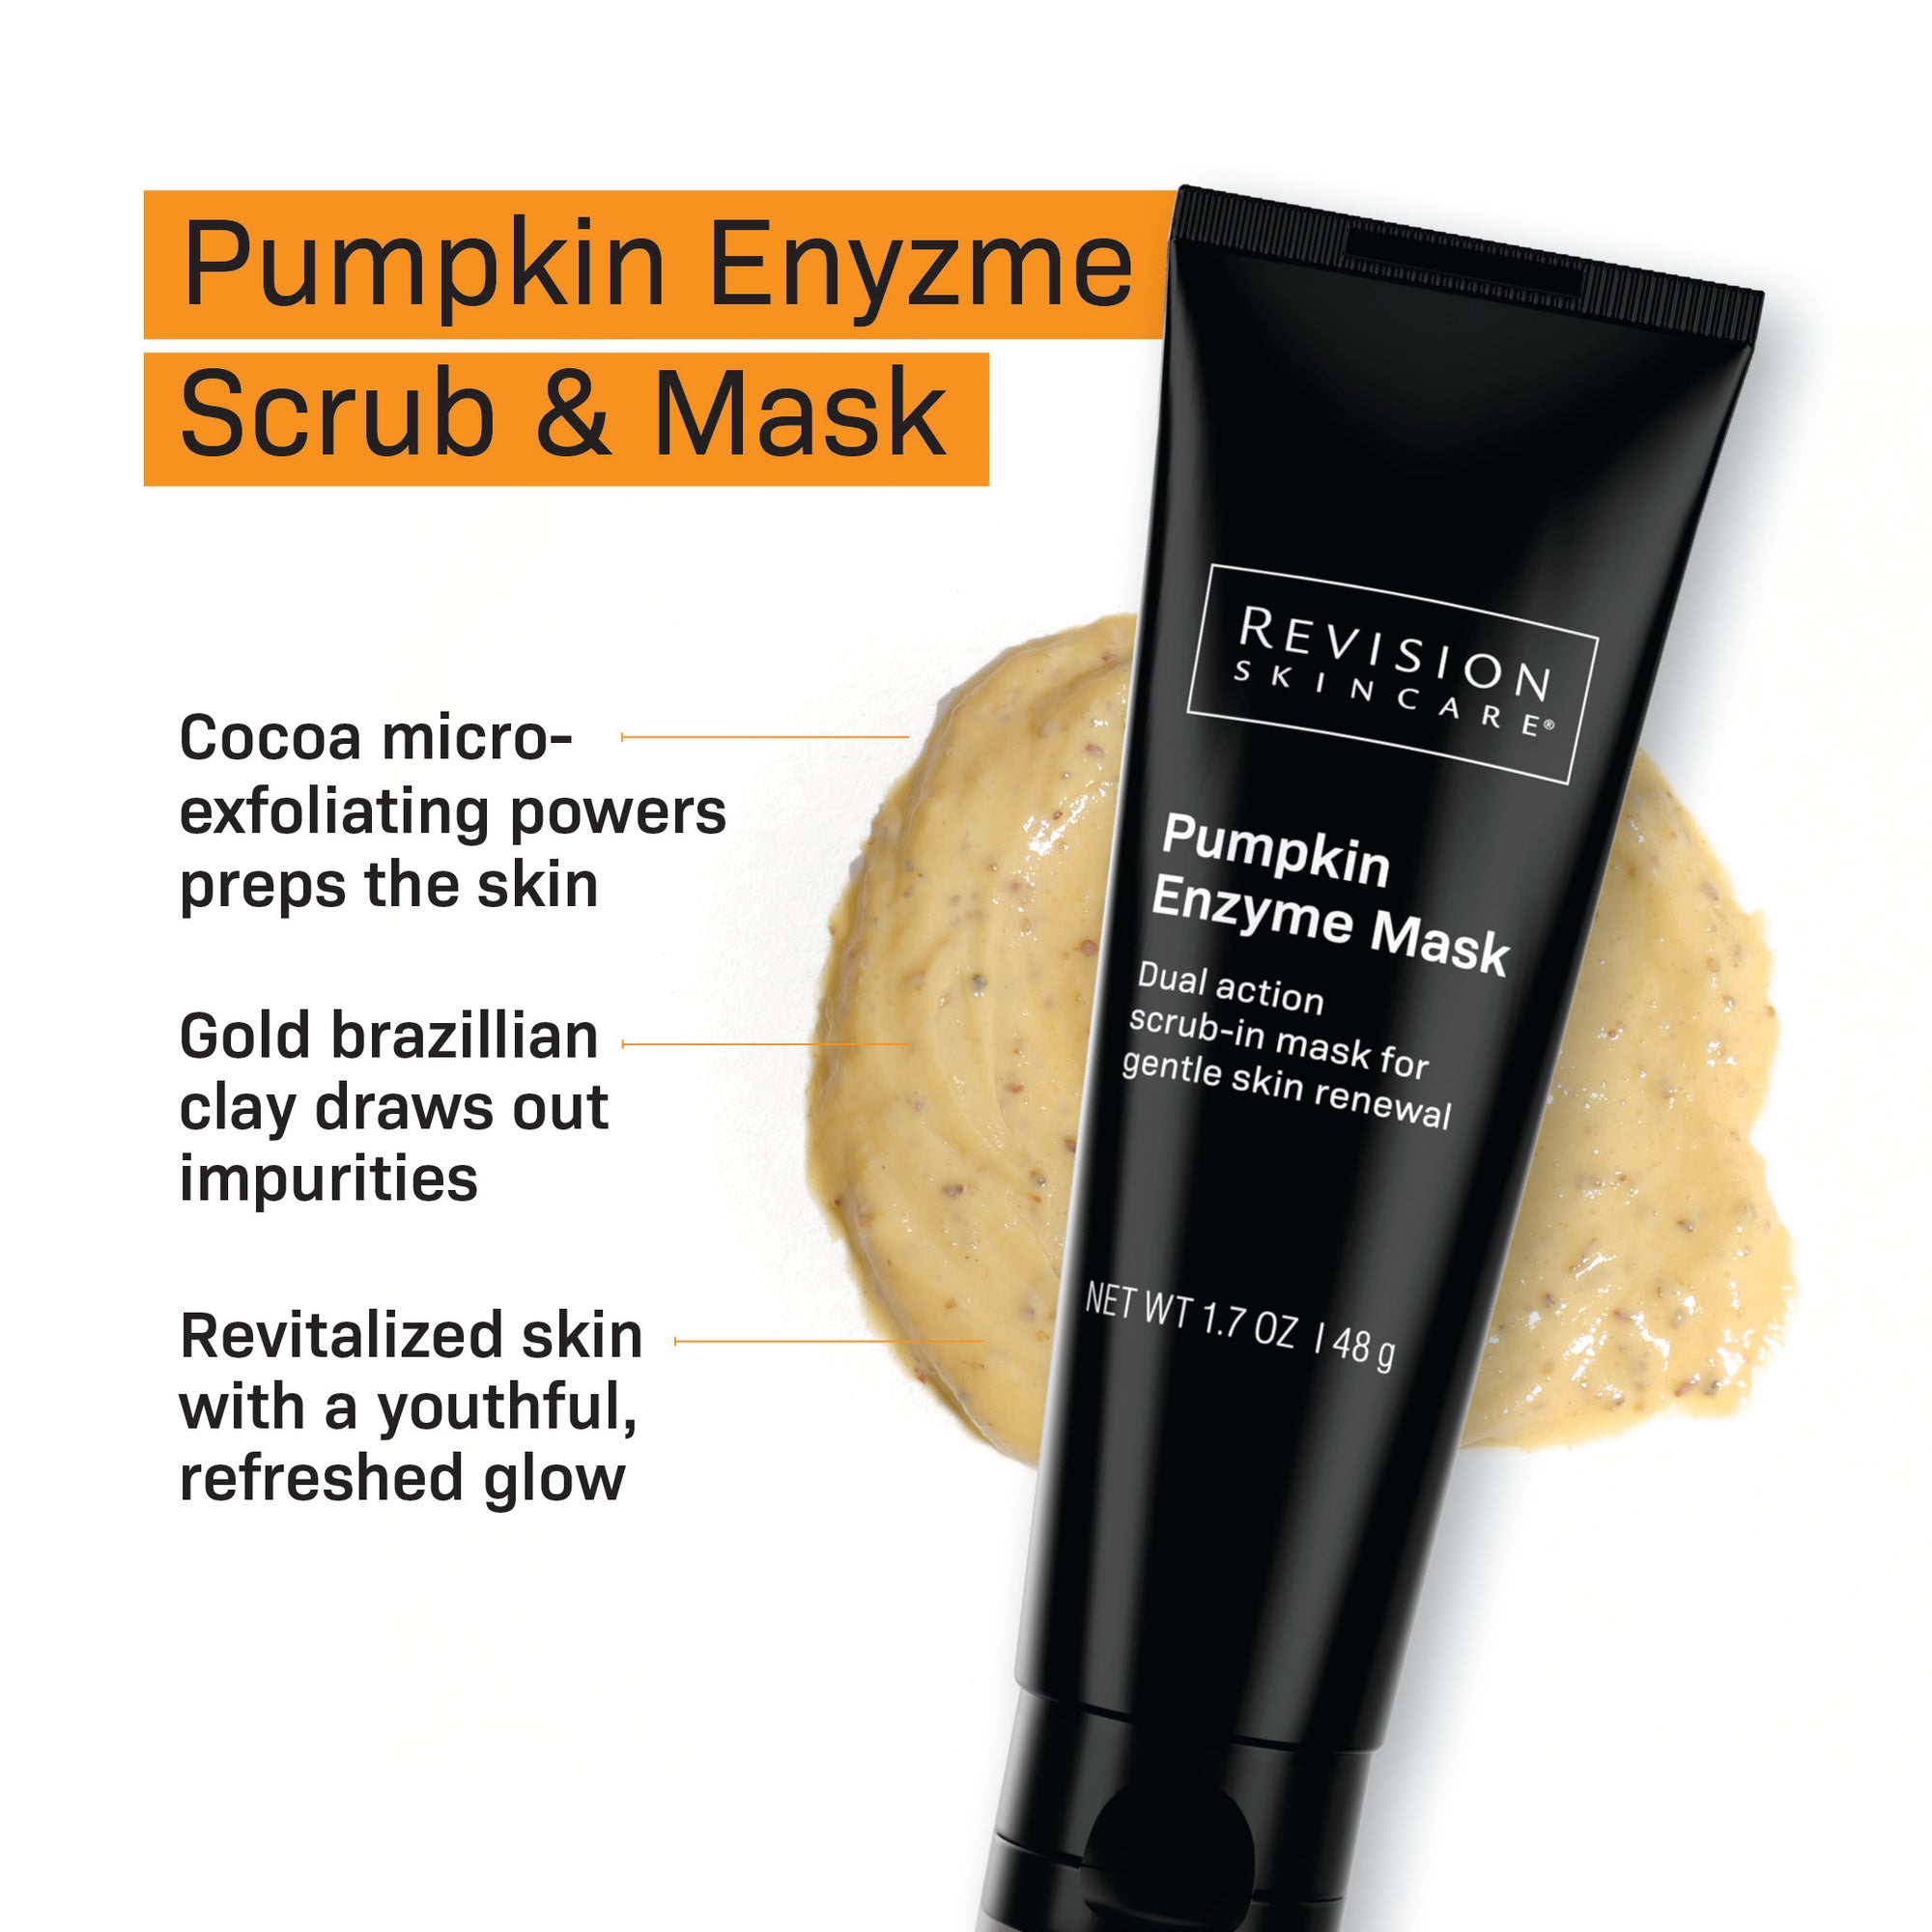 Pumpkin Enzyme Mask 1.7 oz Revision Skincare